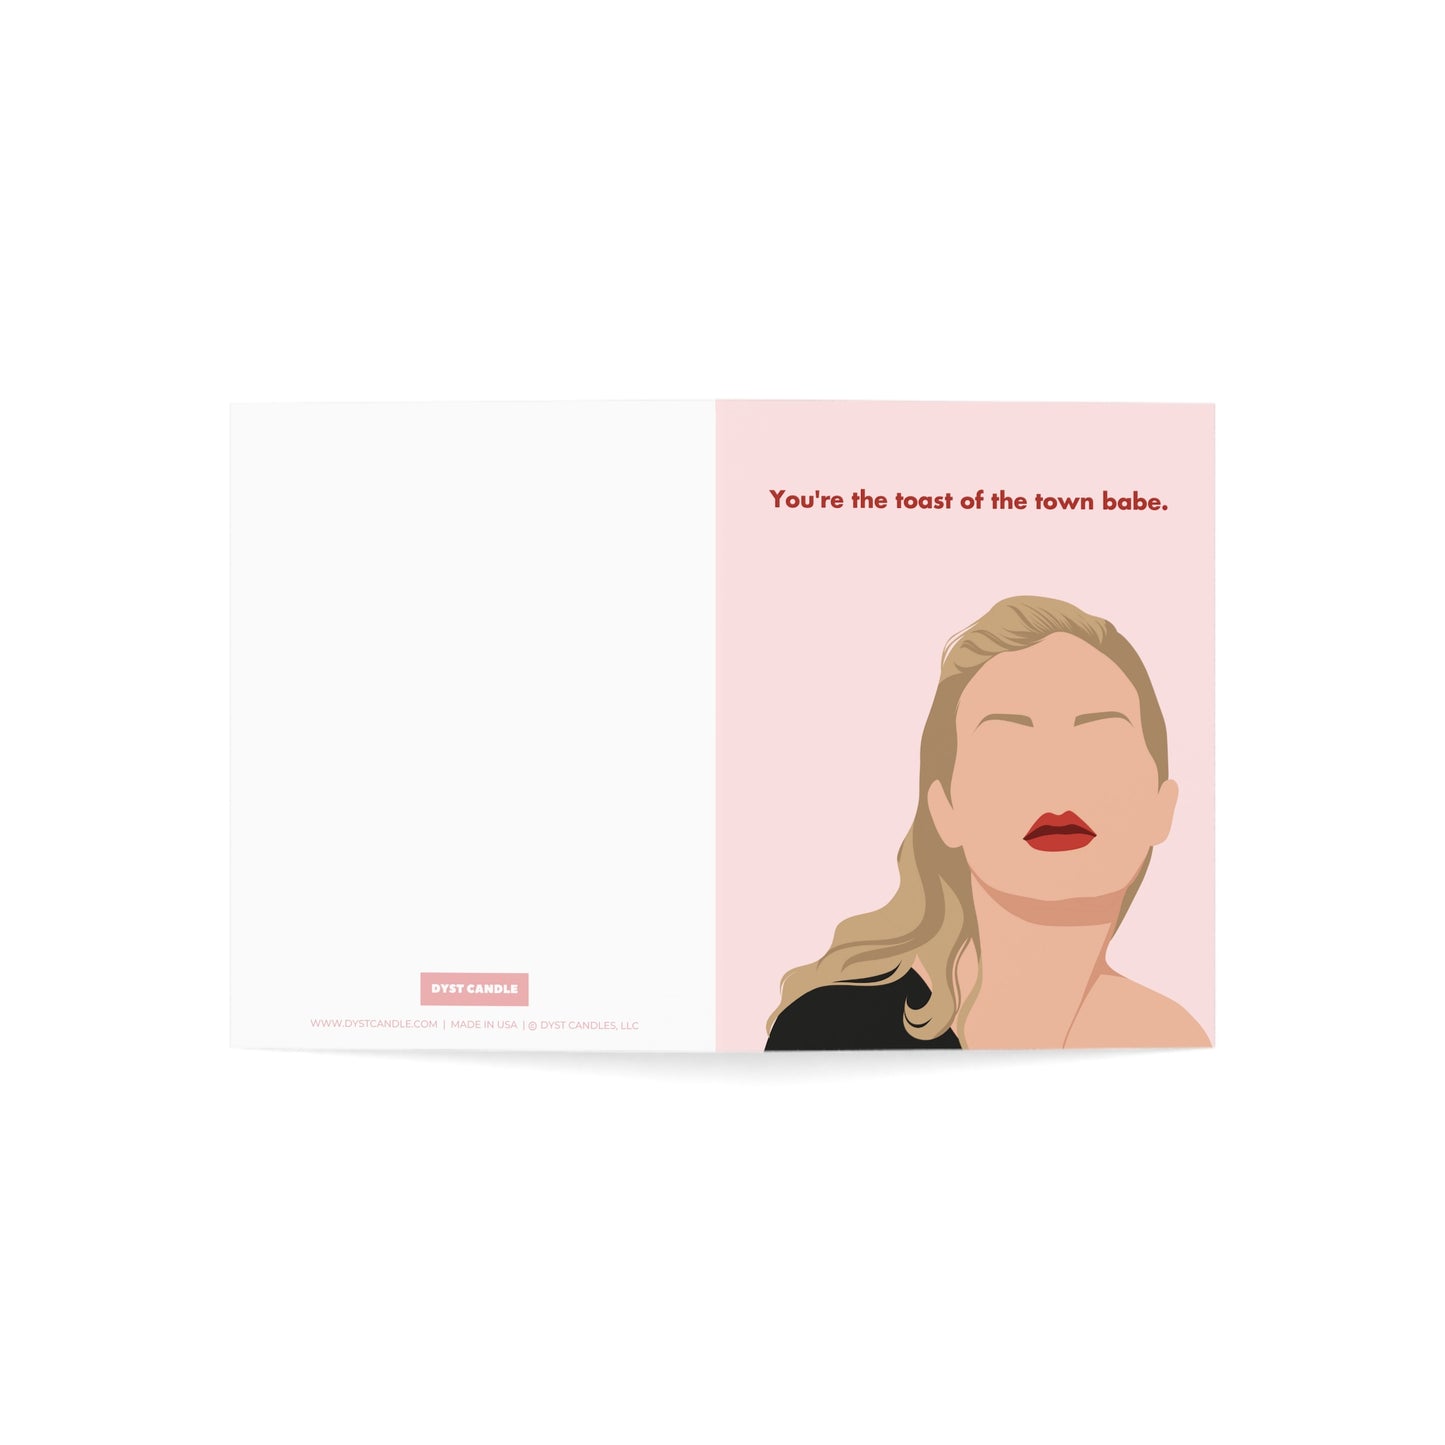 The Taylor - Happy Birthday Greeting Card